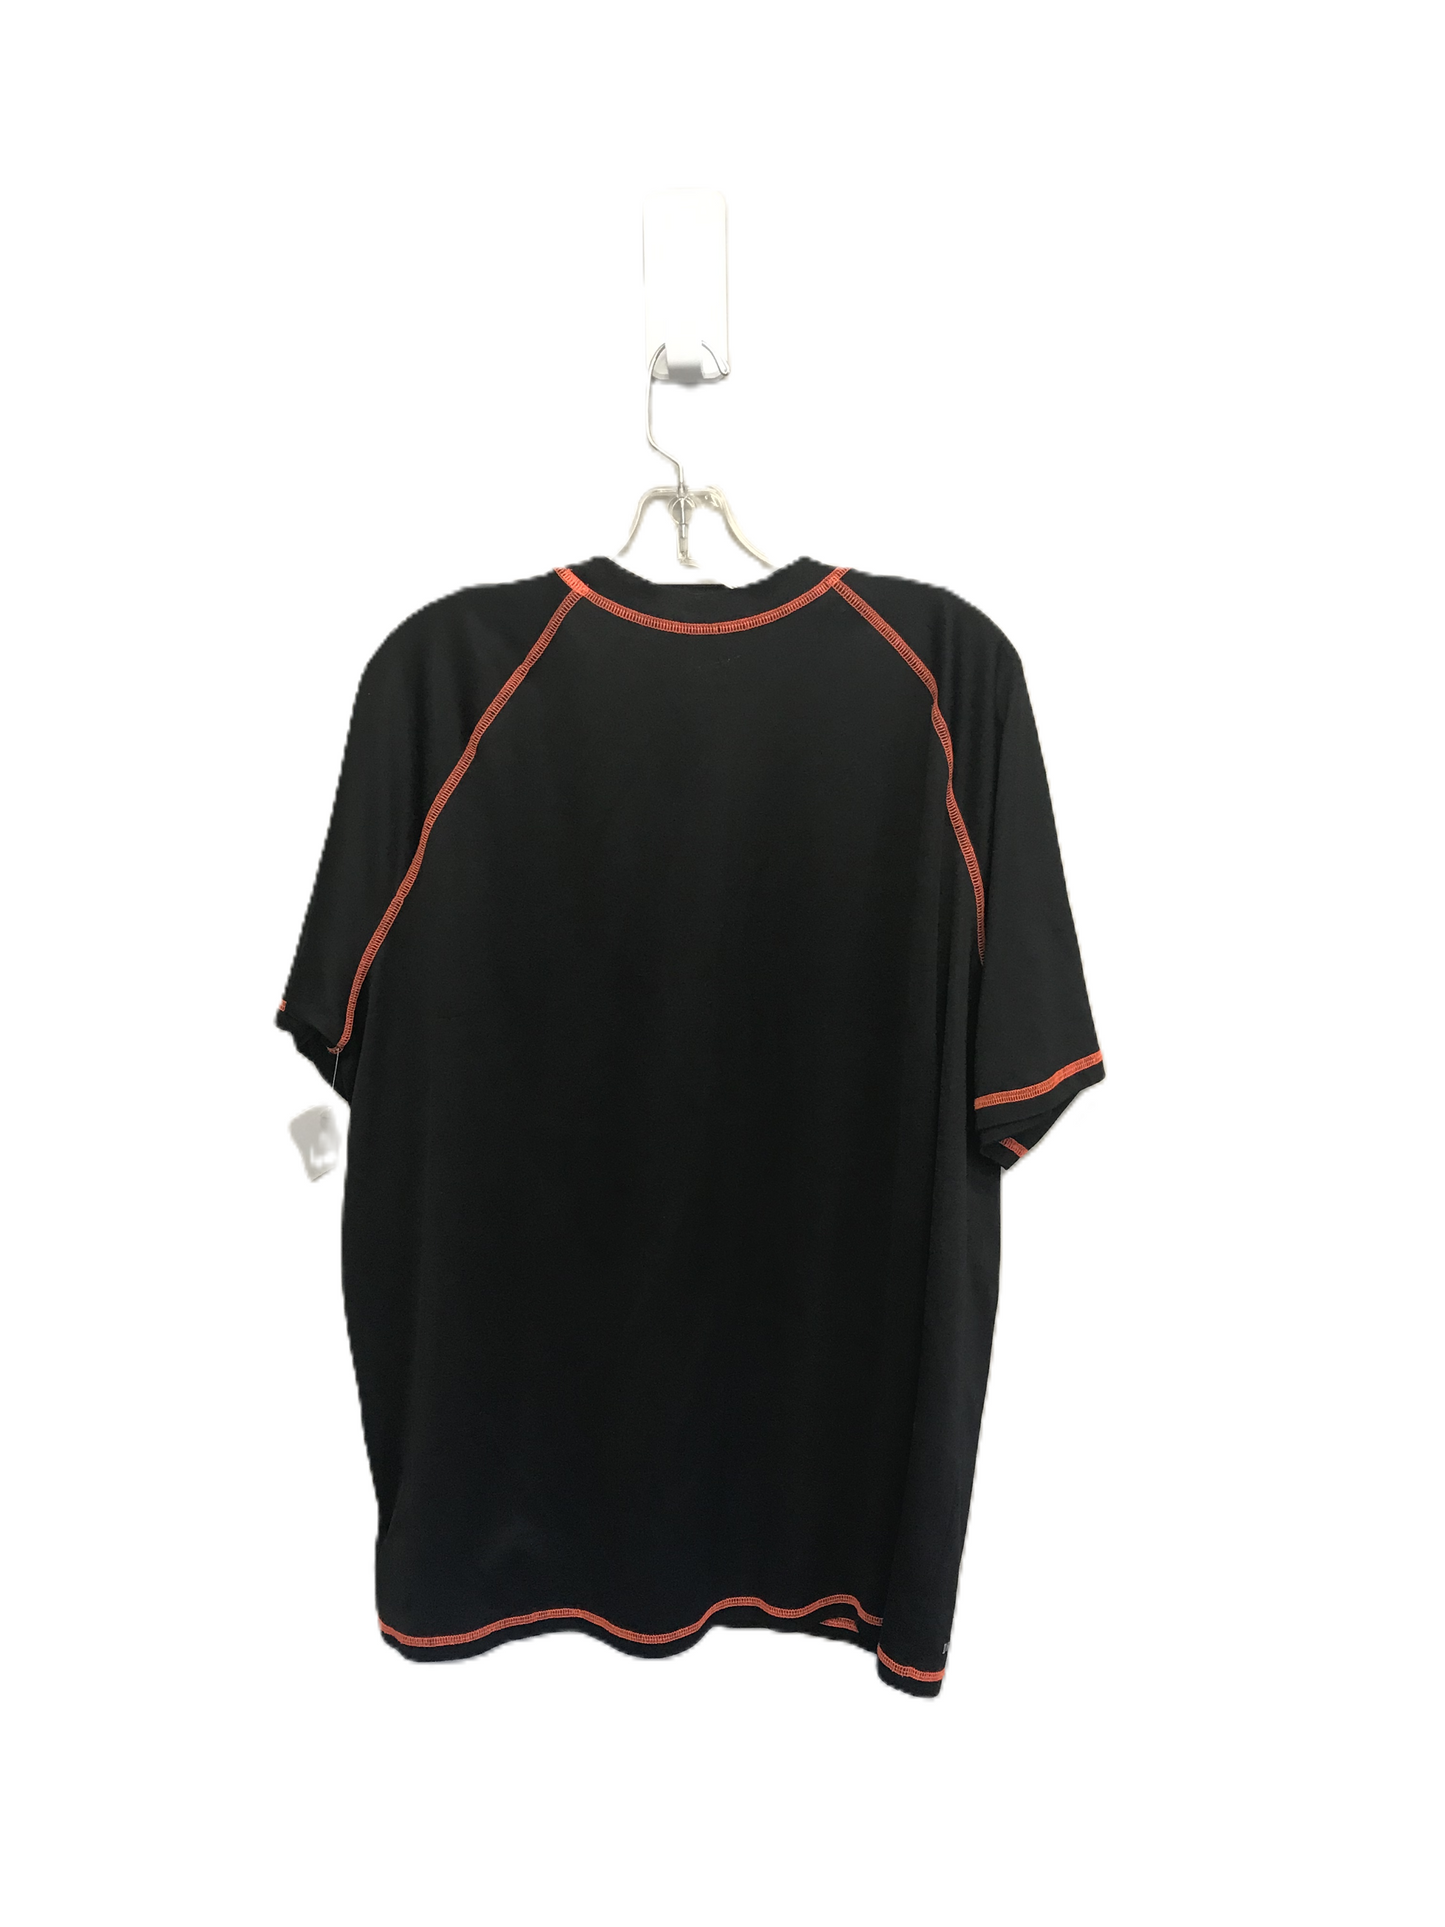 Black & Orange Athletic Top Short Sleeve By Nike Apparel, Size: 1x